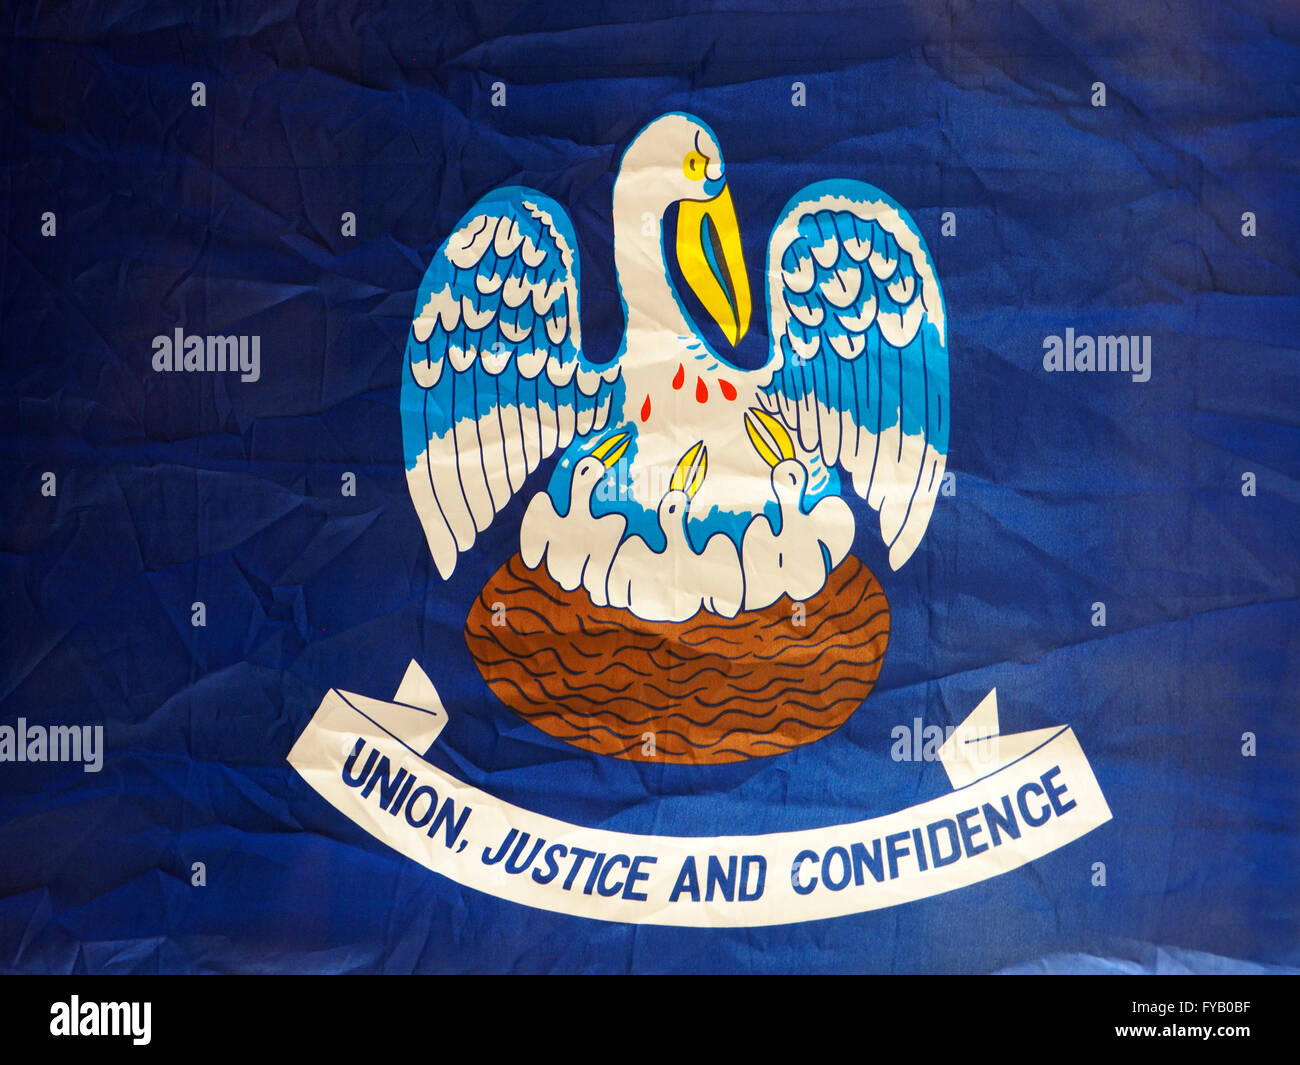 Louisiana Motto Union Justice and Confidence Stock Photo